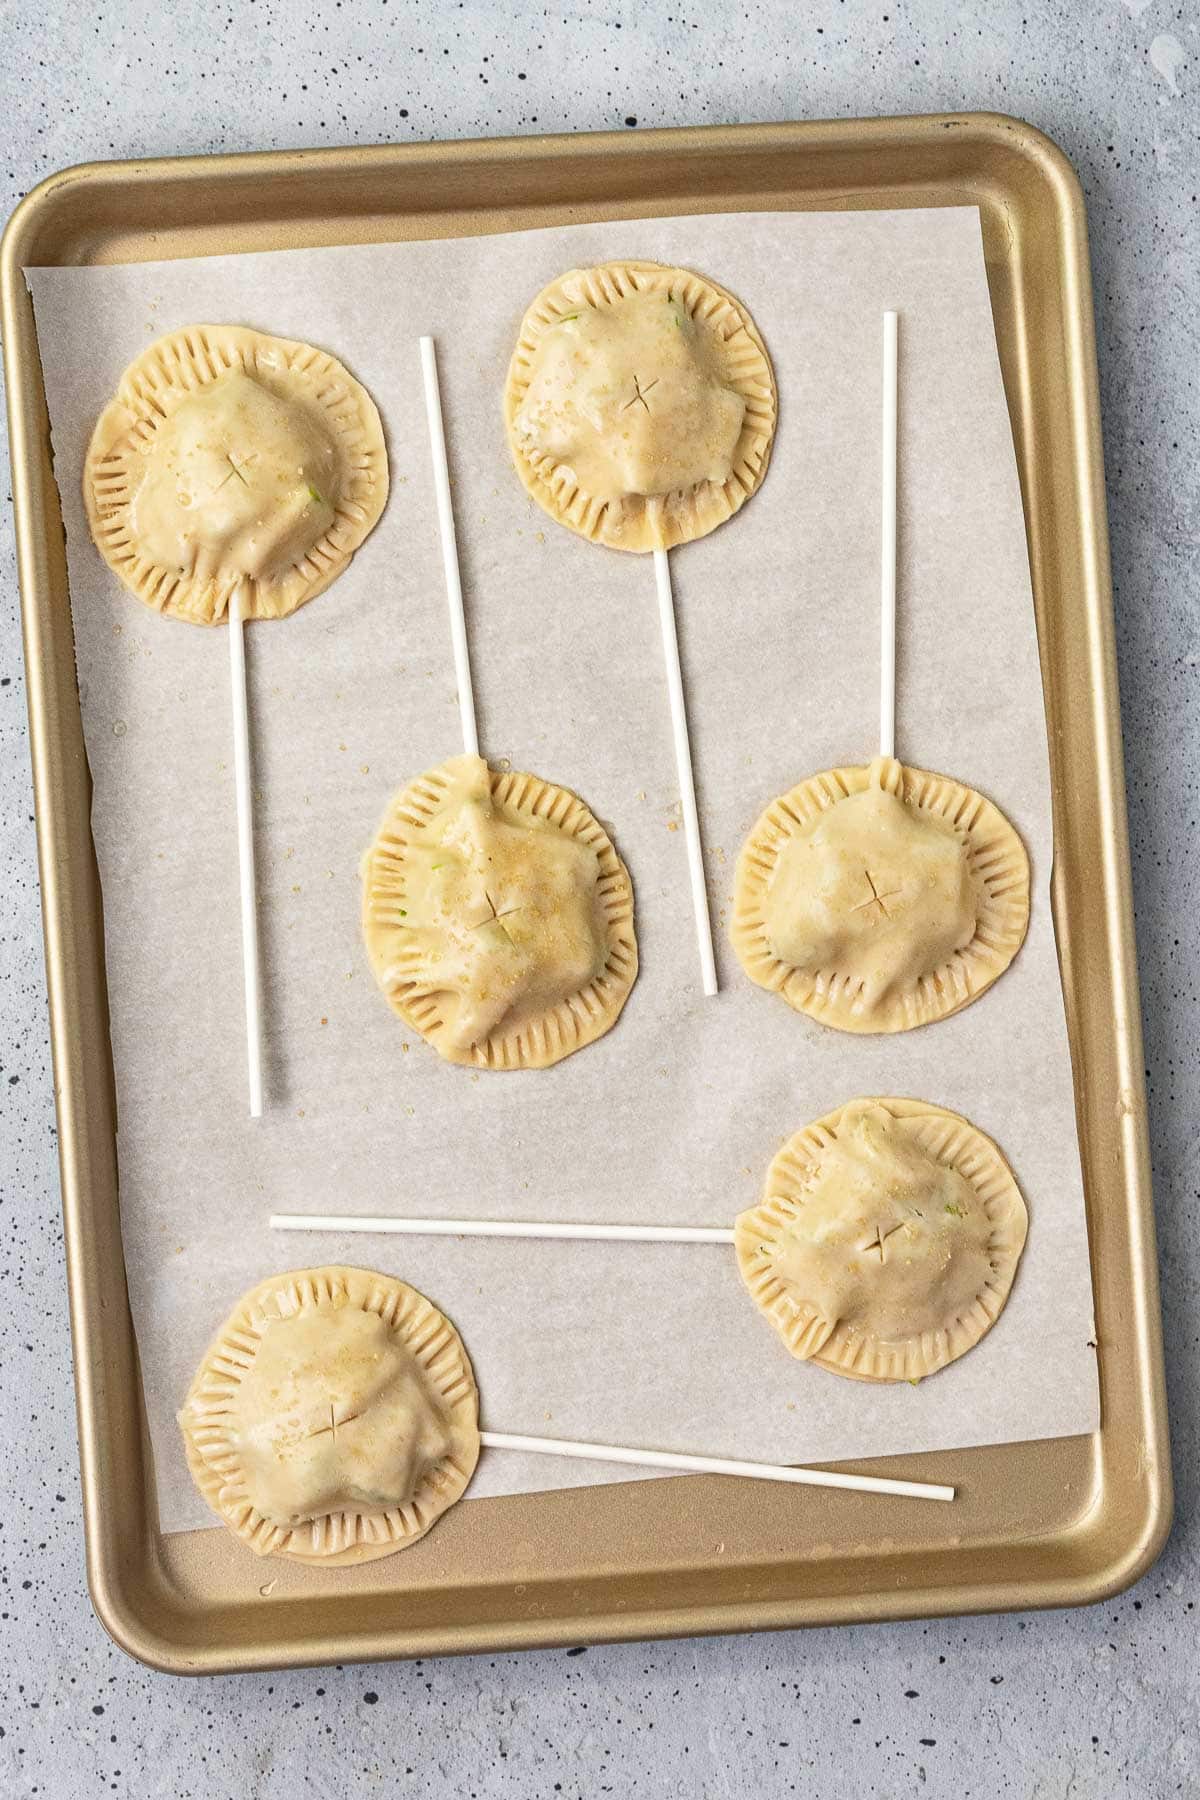 Apple Pie Pops on baking pan before baking